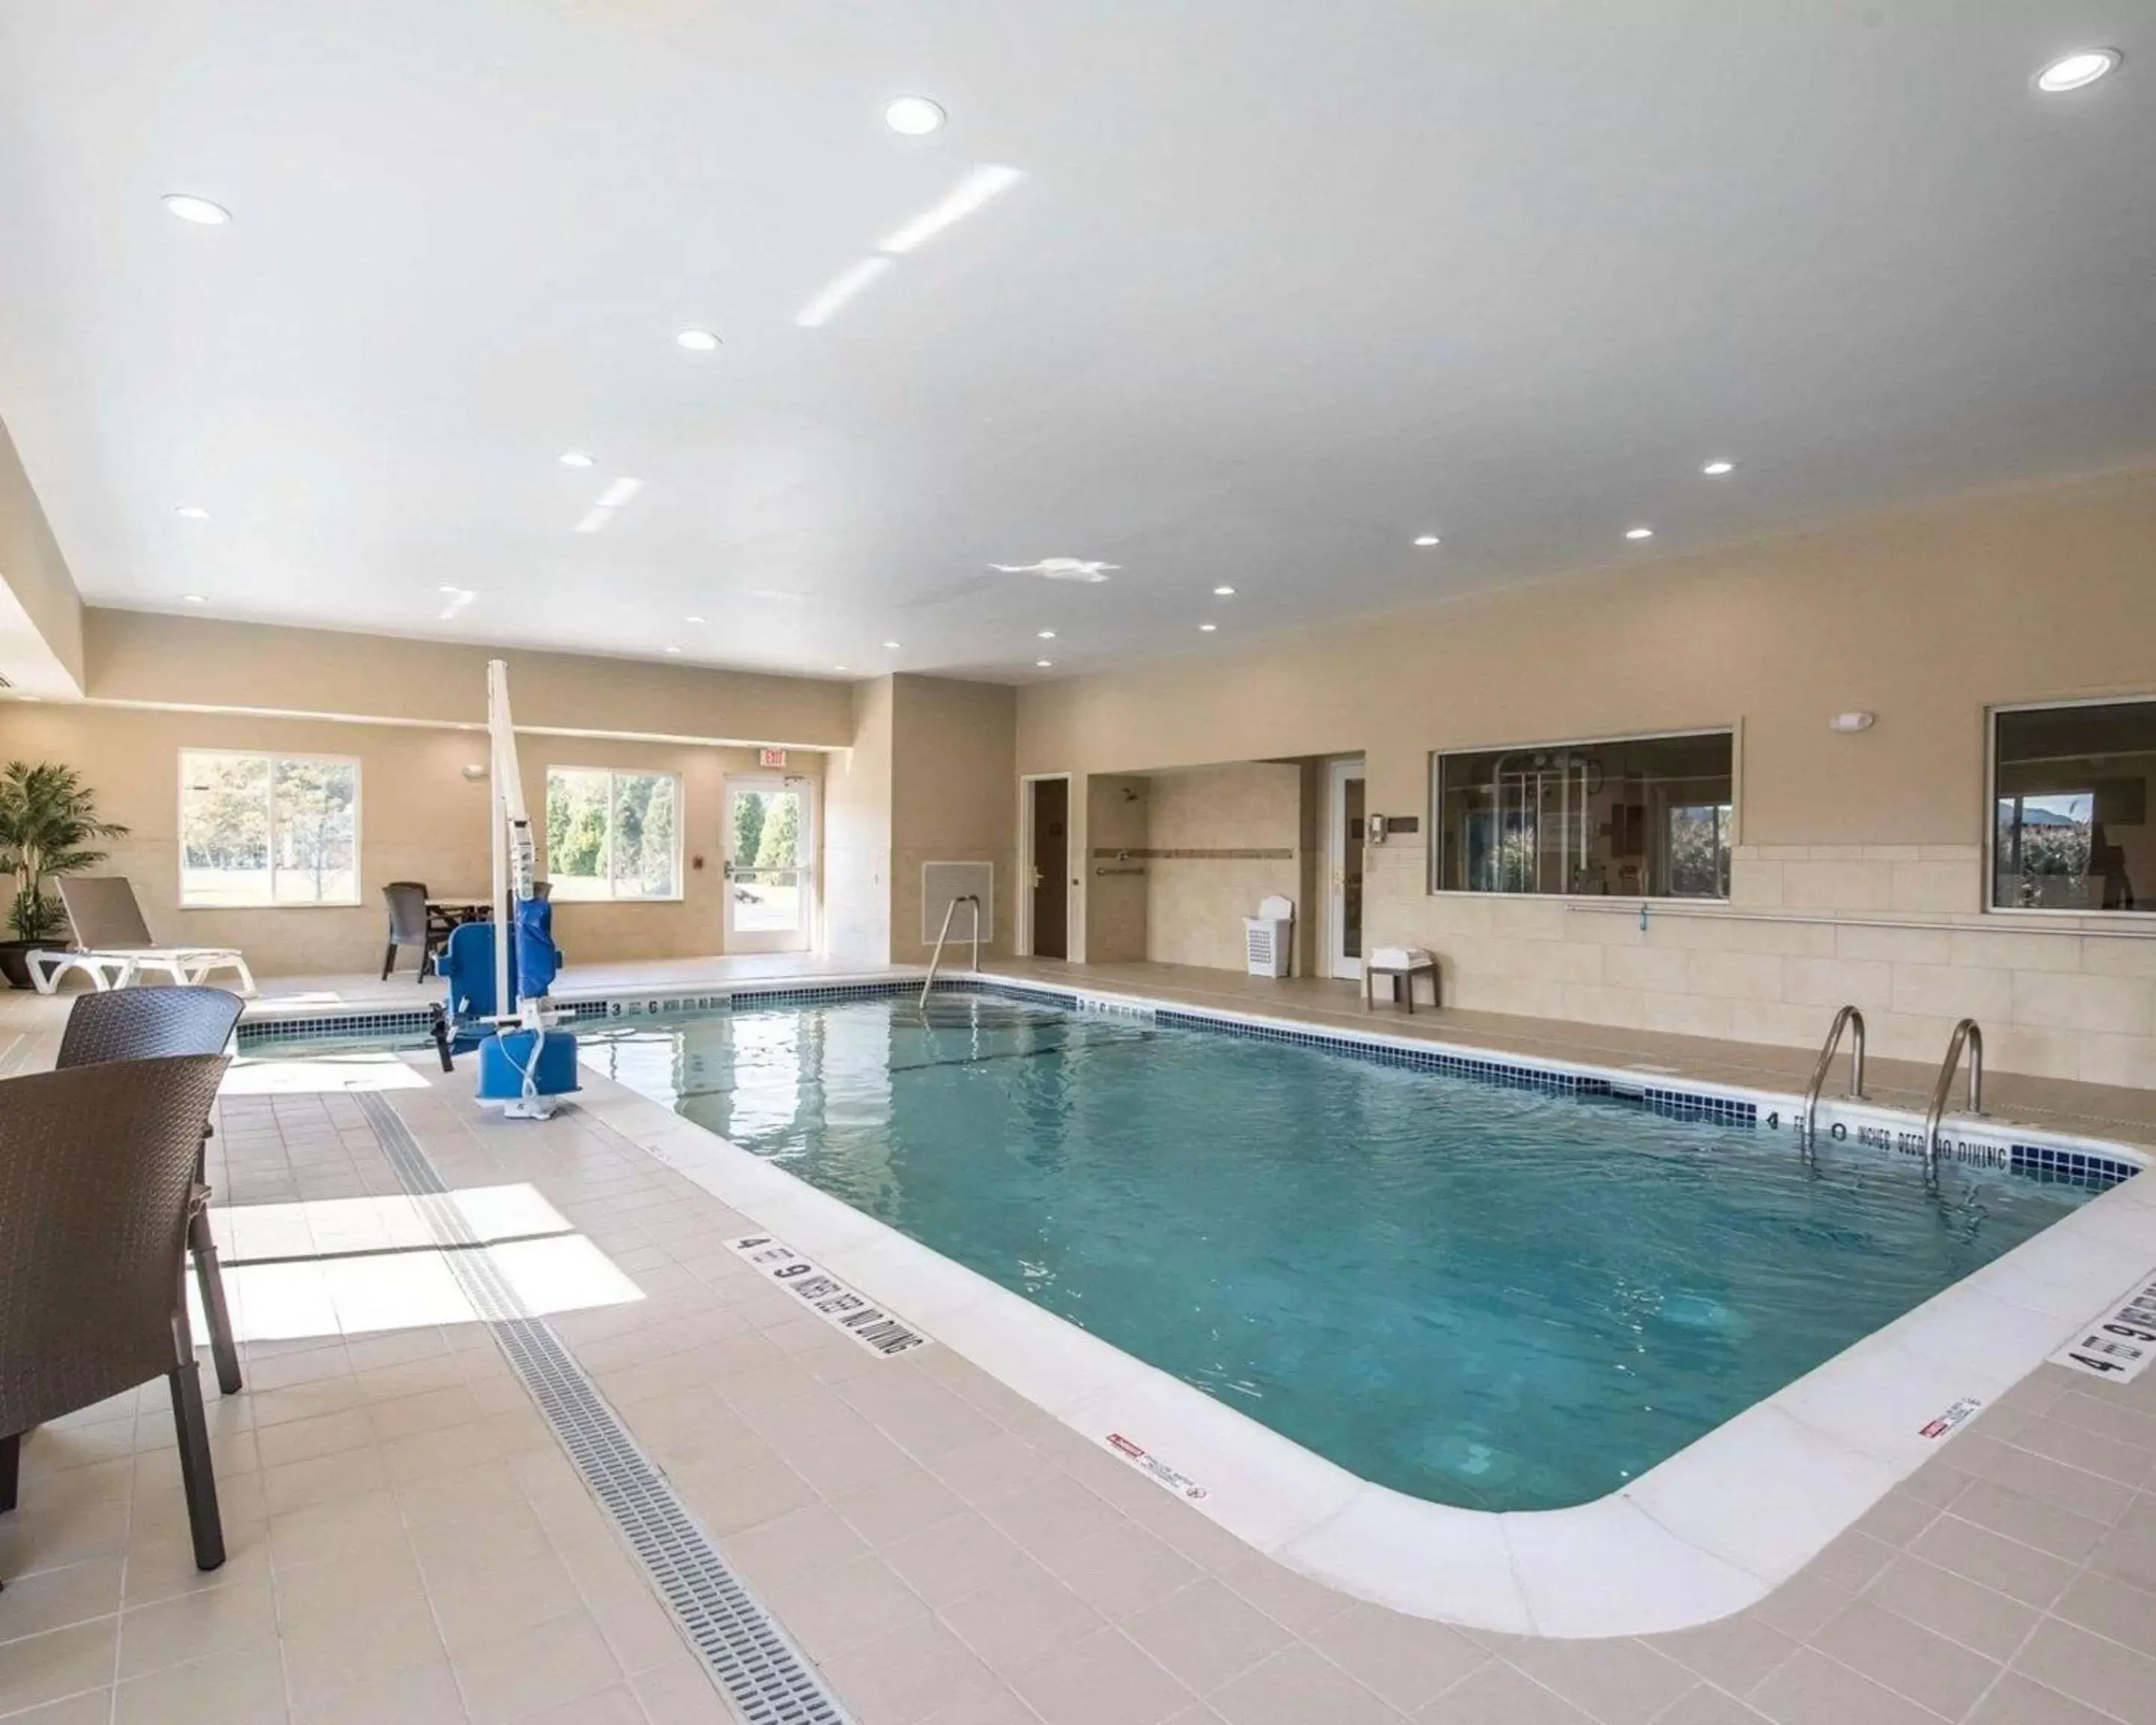 On site, Swimming Pool in Comfort Inn Saugerties